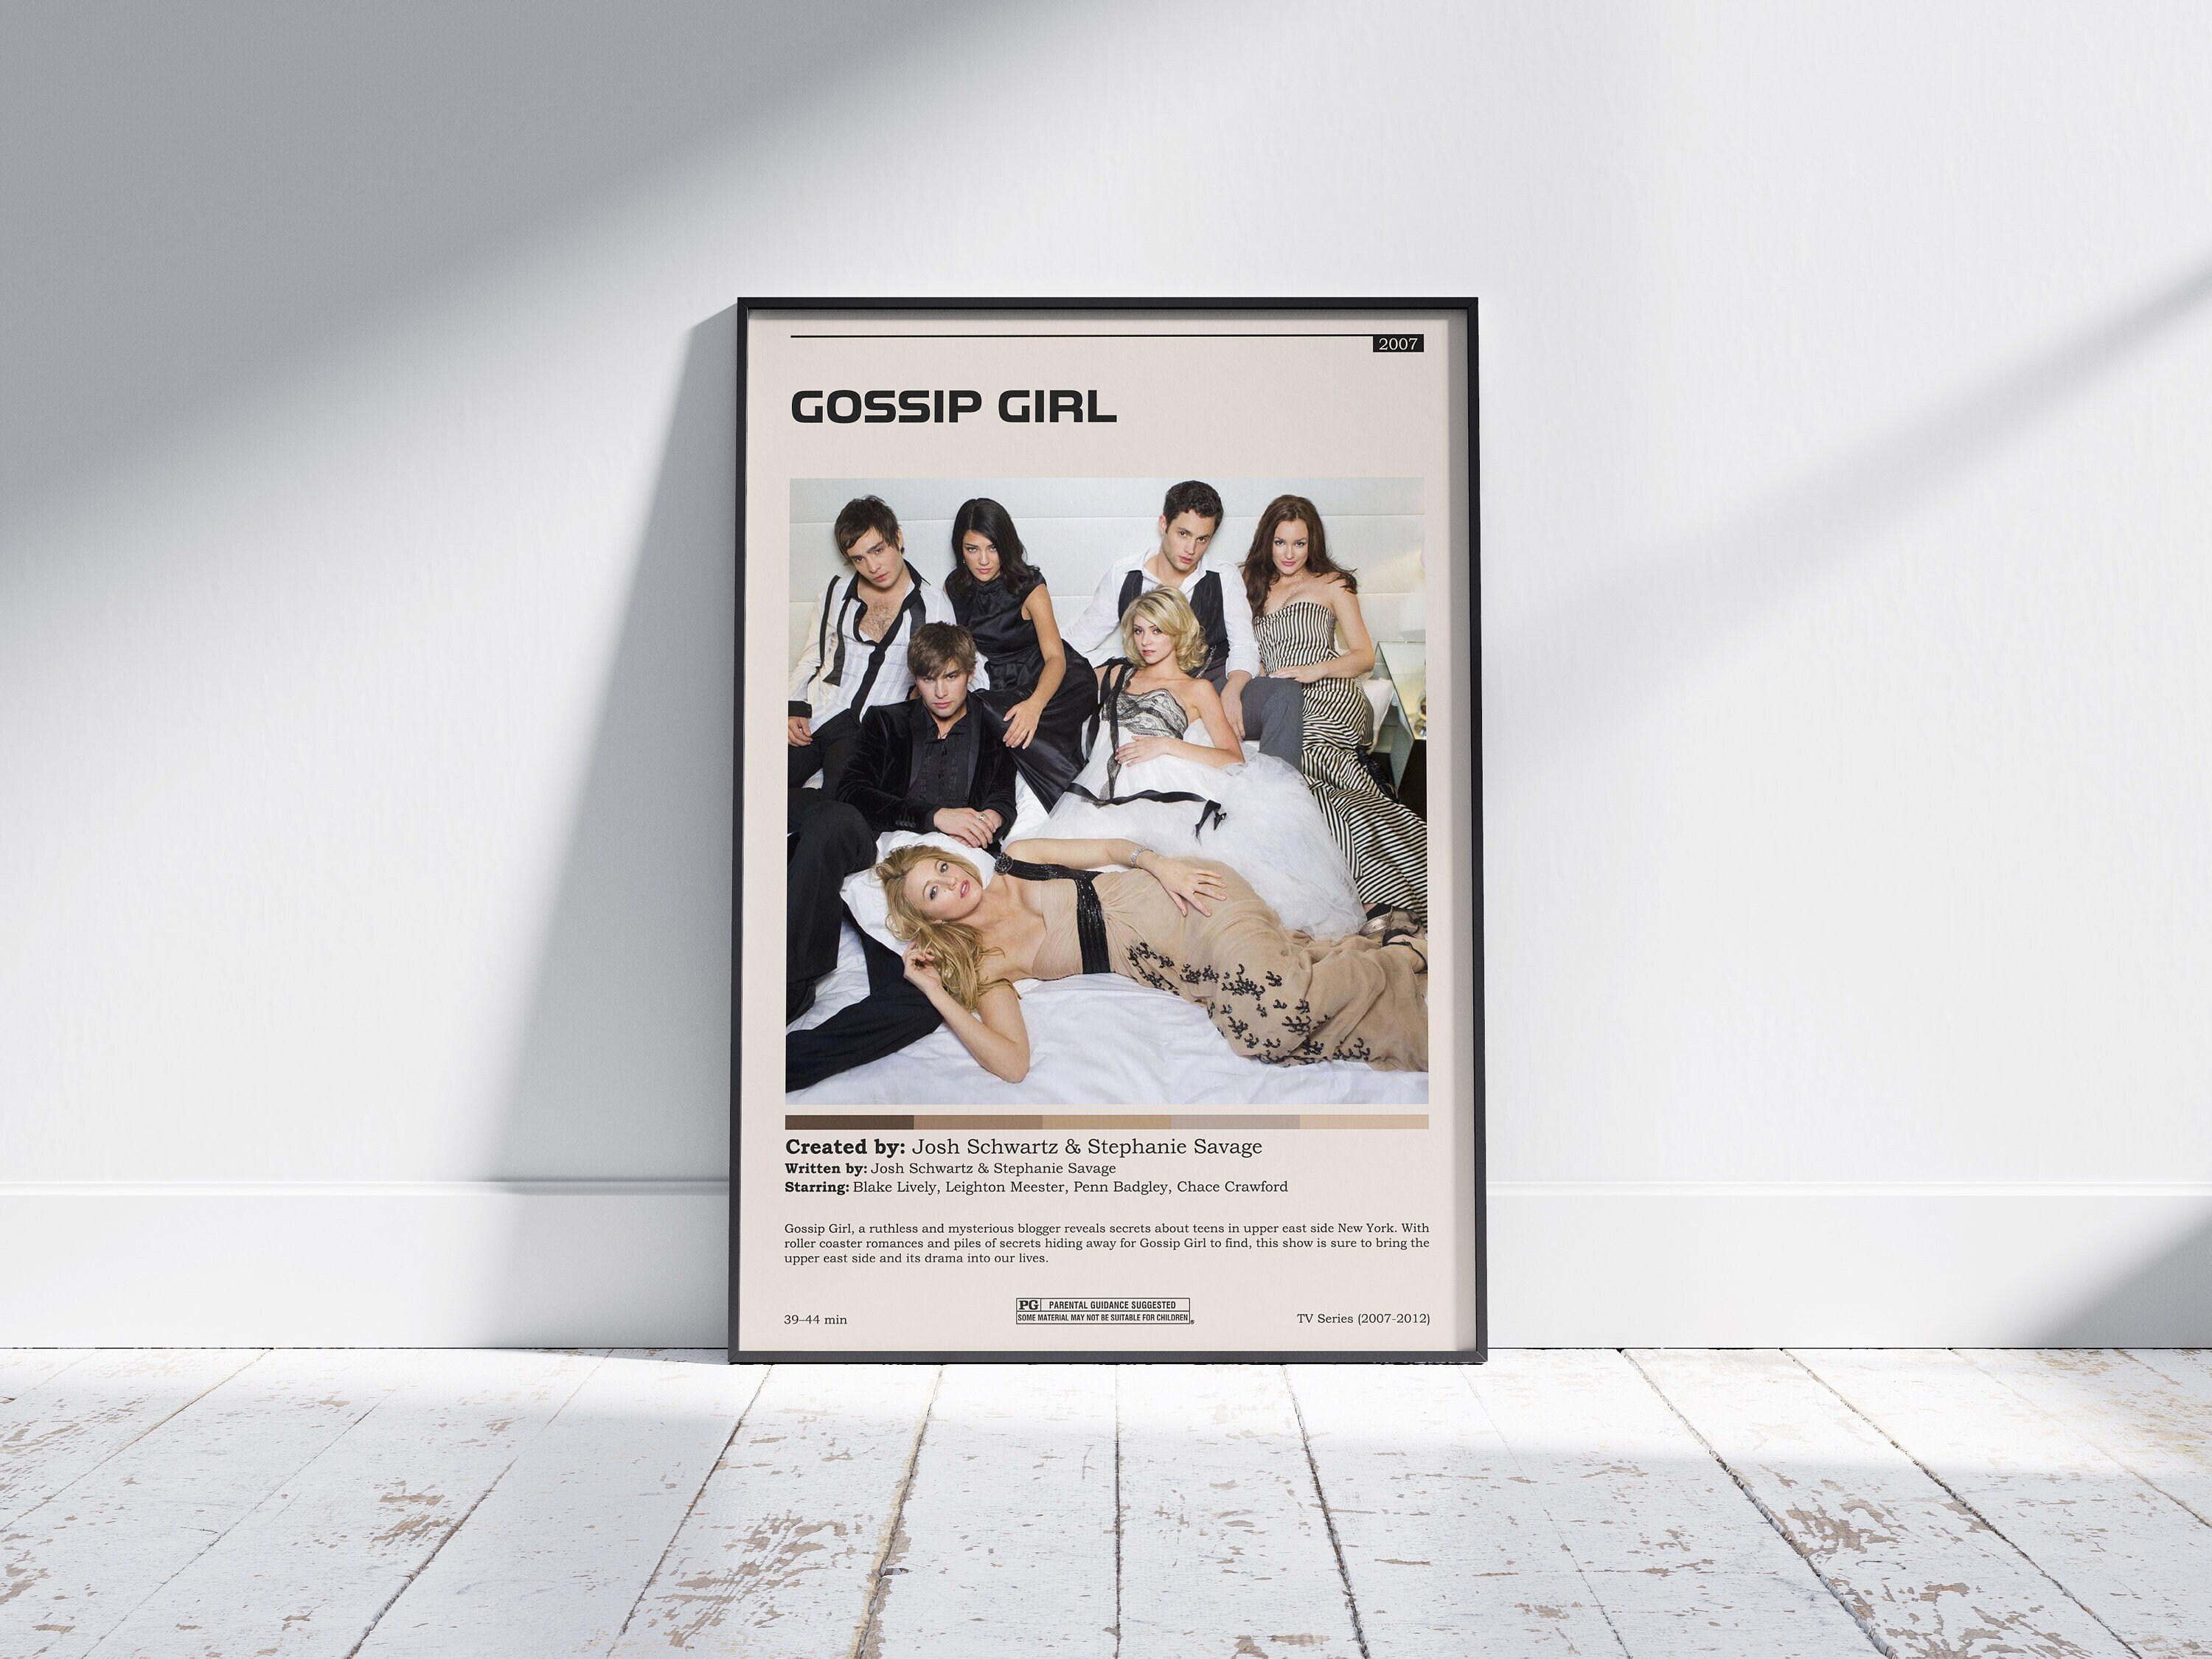 Gossip girl poster / gossip girl tv series poster sold by Weston